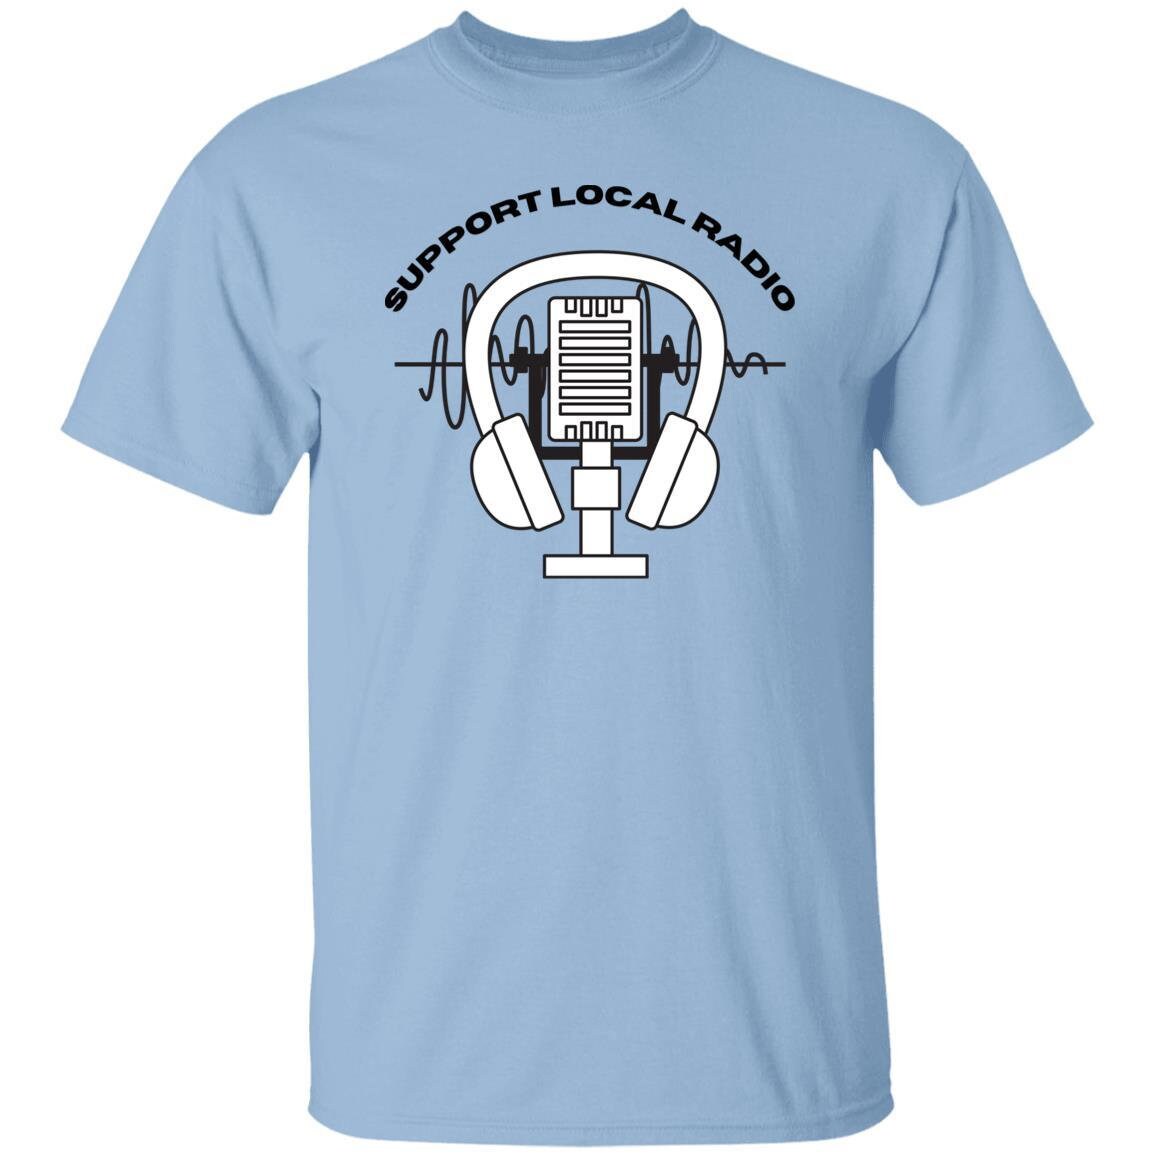 Support Local Radio T-Shirt